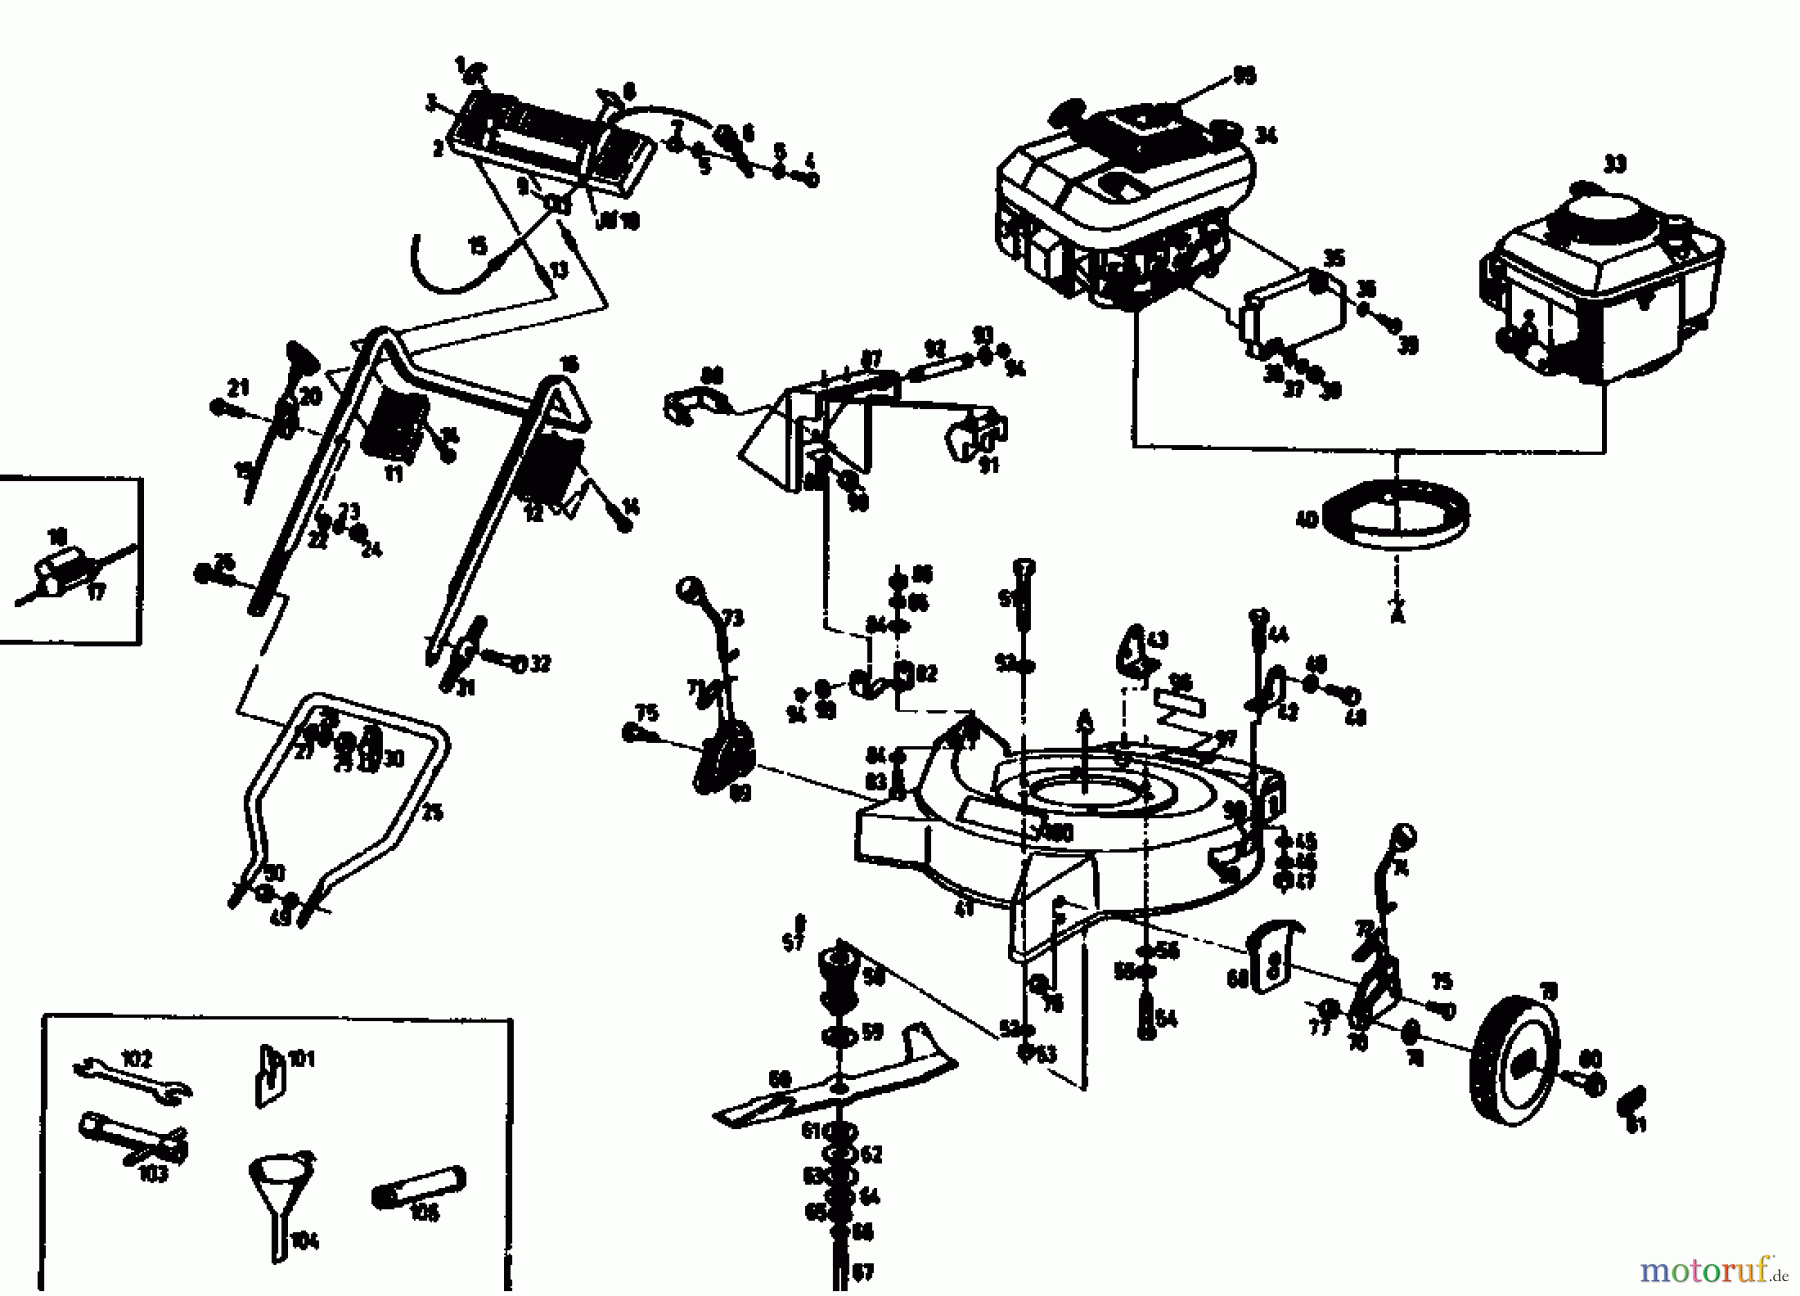  Gutbrod Petrol mower MS 482 04008.01  (1990) Basic machine